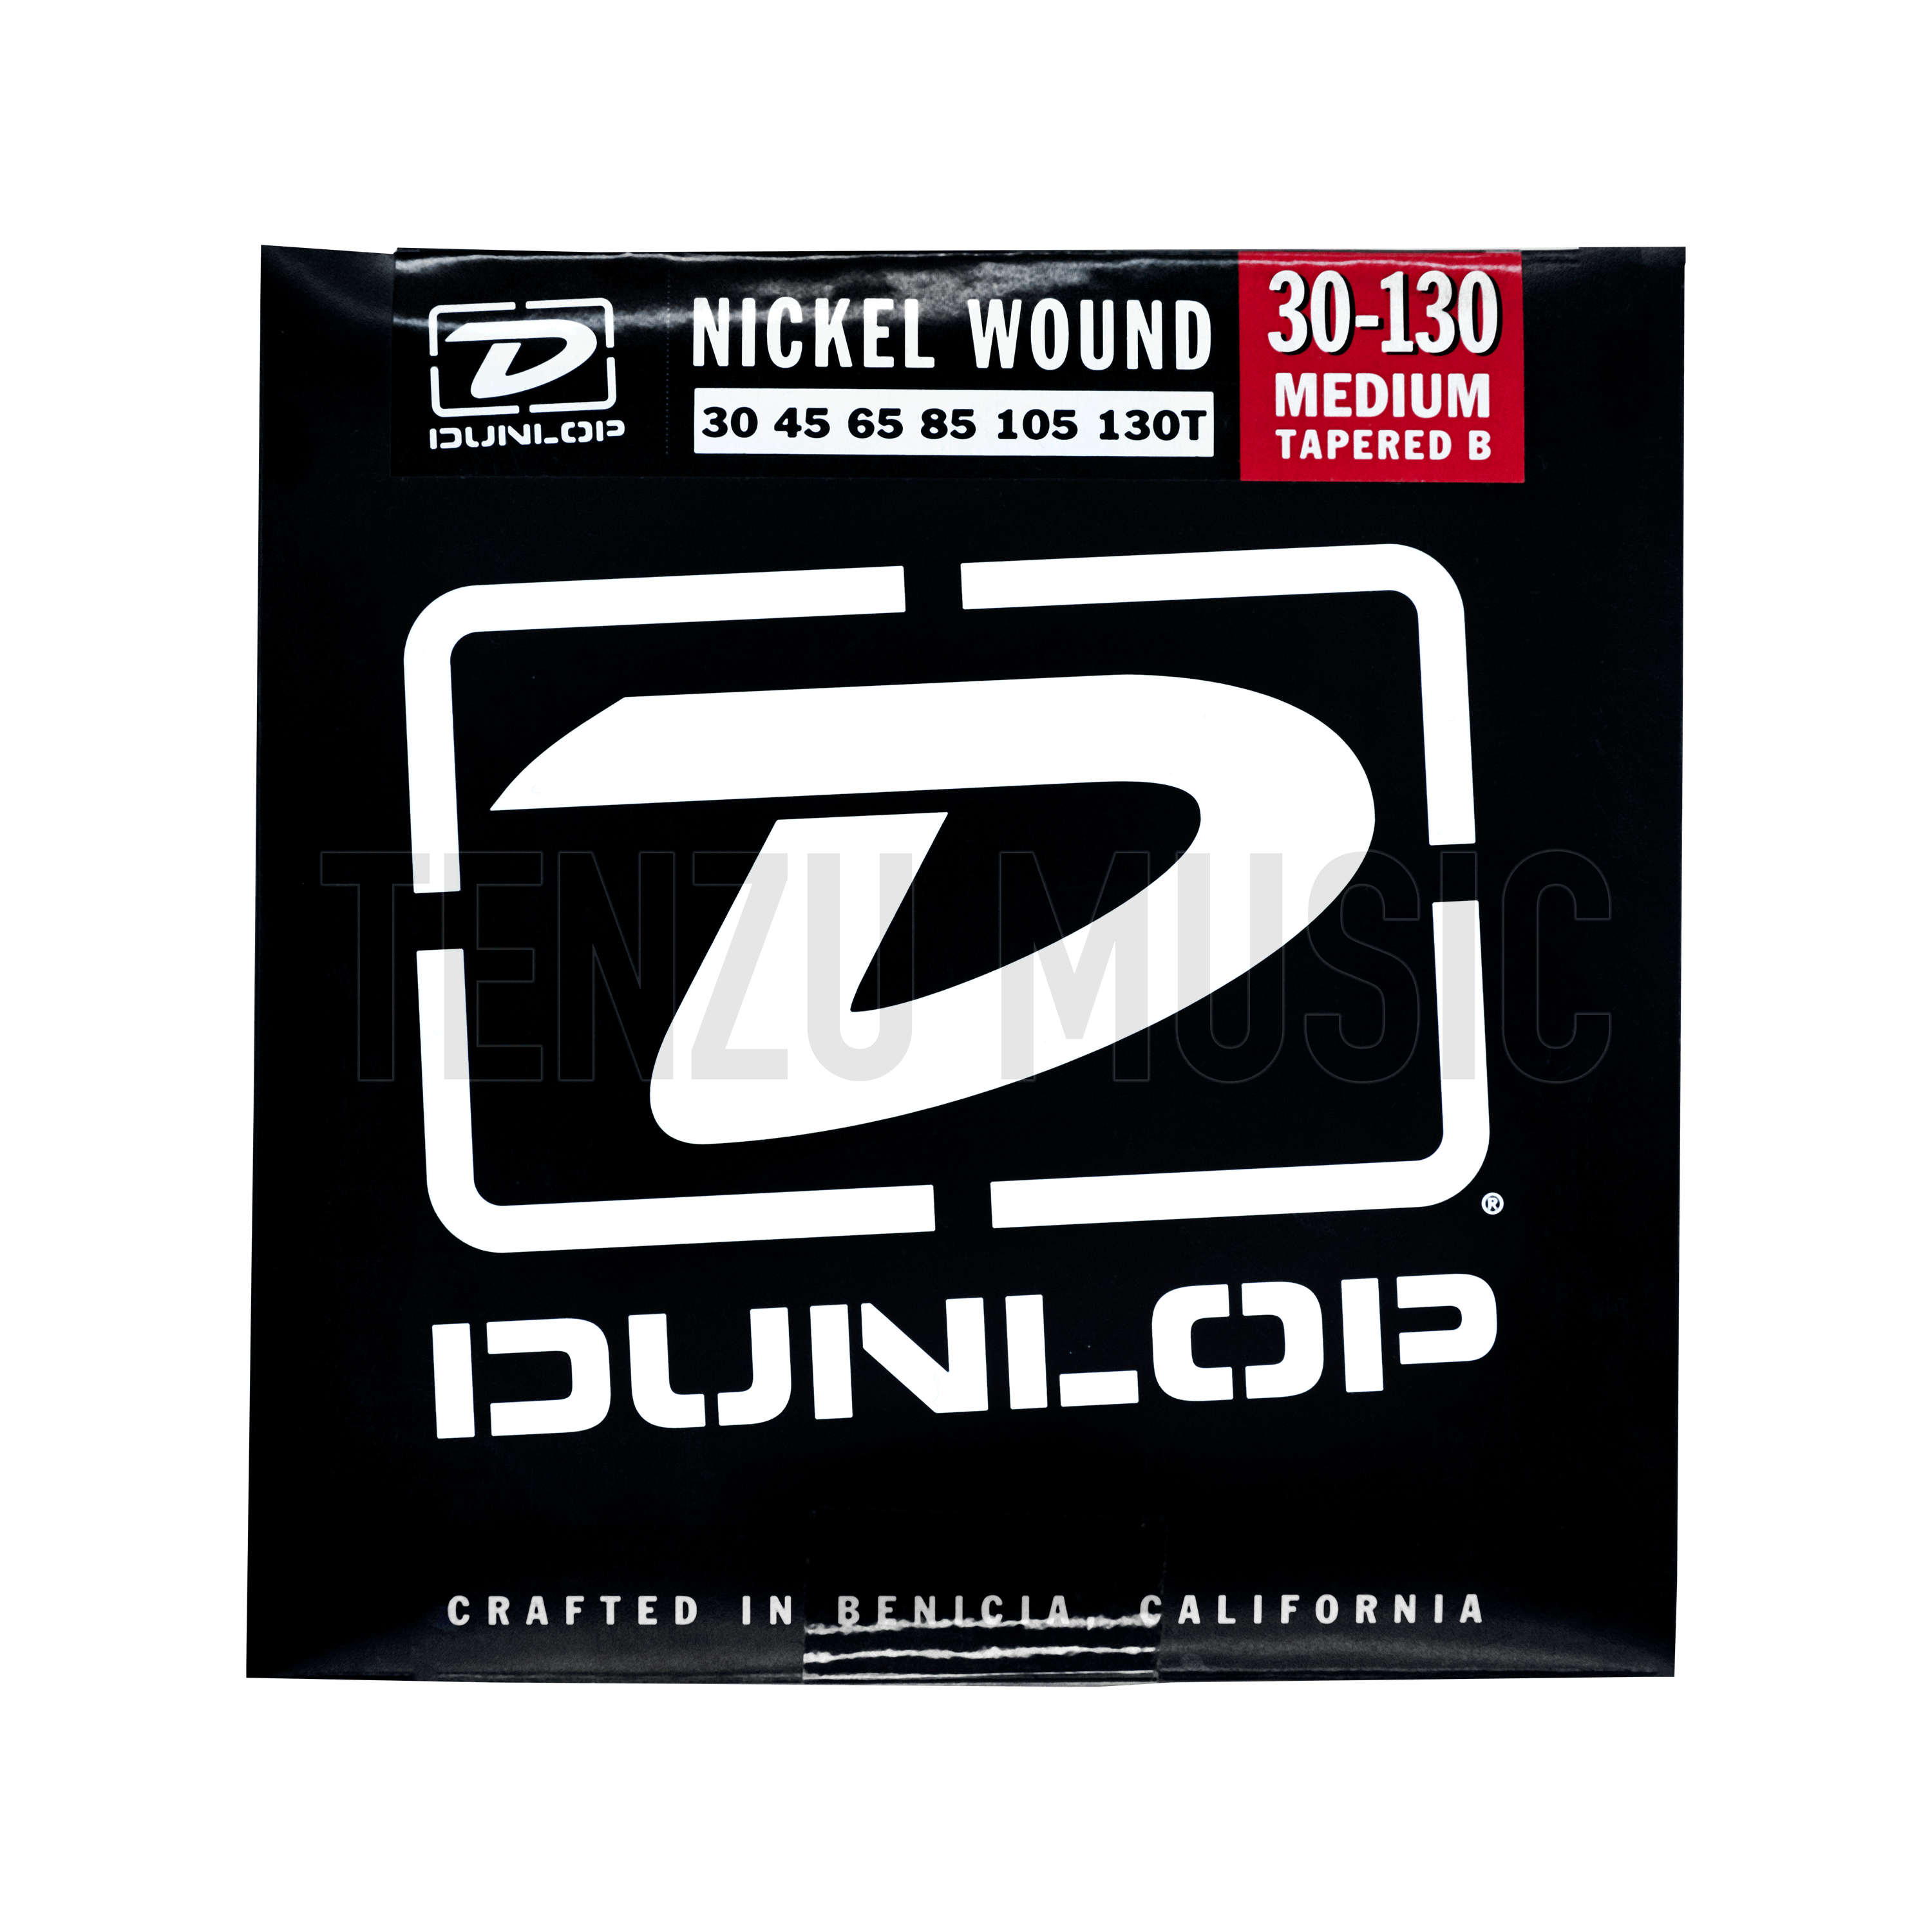 سیم گیتار Dunlop Nickel Wound 30-130 (Medium) 